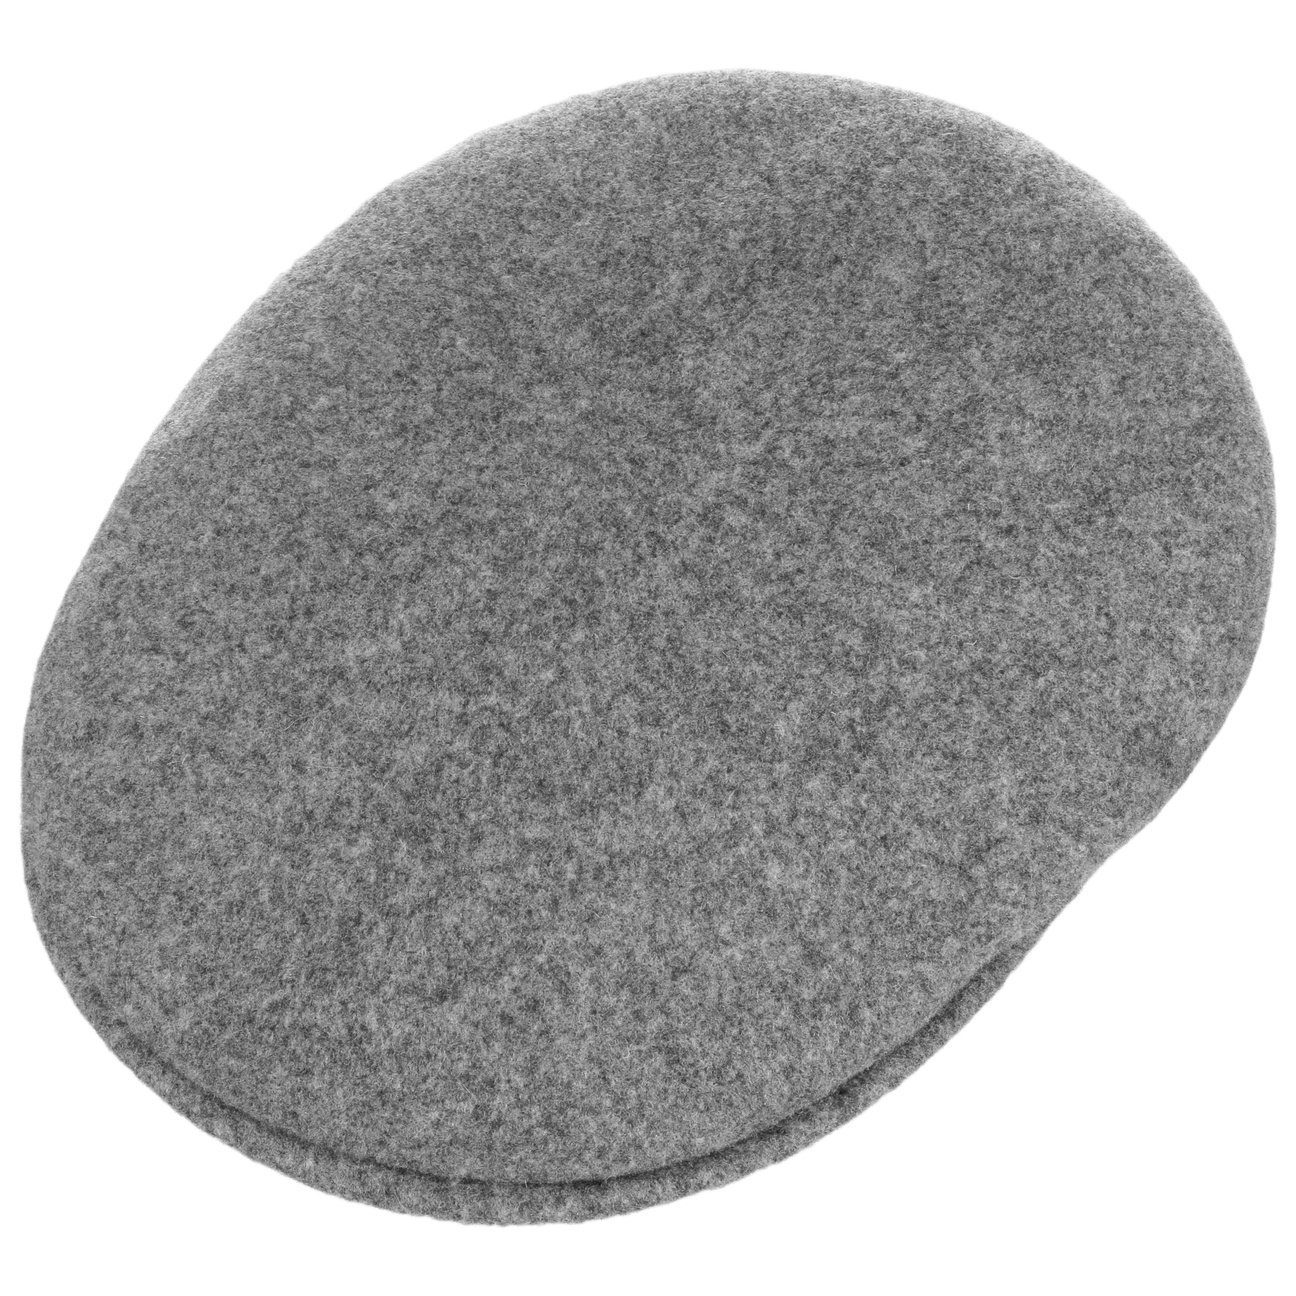 Schirm Cap Flat mit grau (1-St) Kangol Schiebermütze